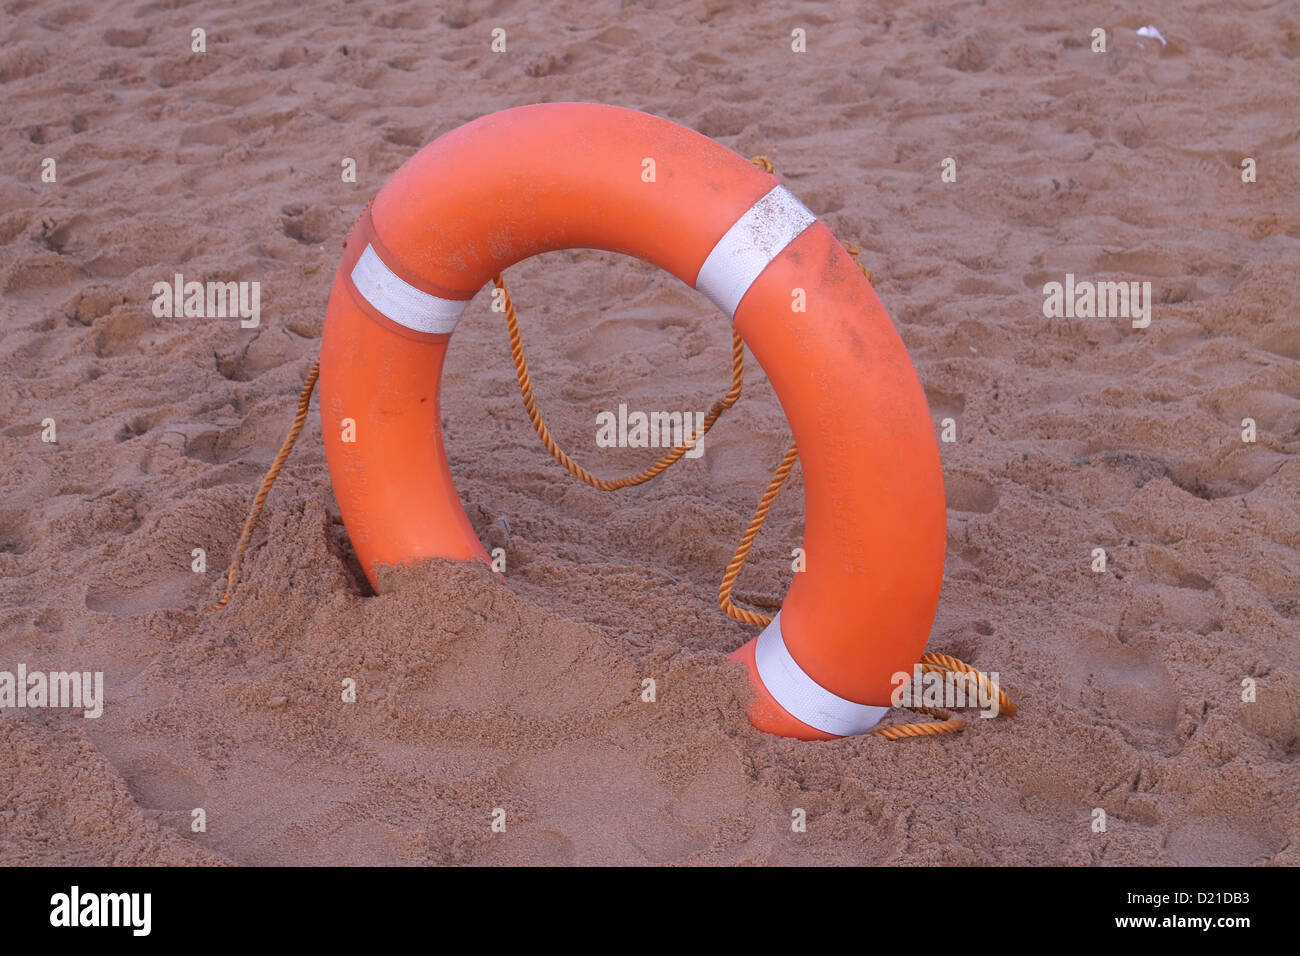 A lifebuoy, an early morning scene from Shanghumugham beach, Kerala, India Stock Photo